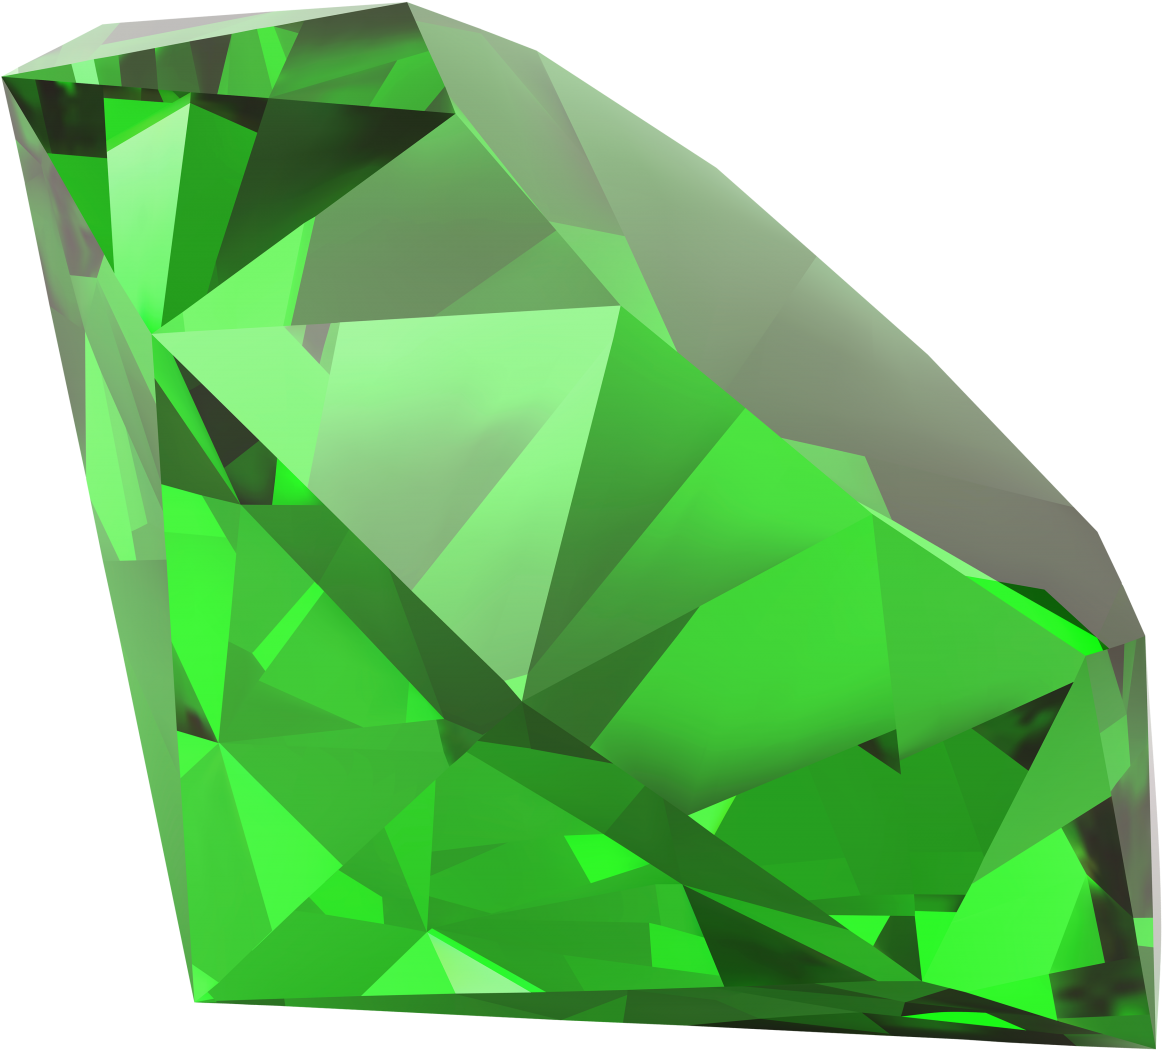 A Green Diamond On A Black Background